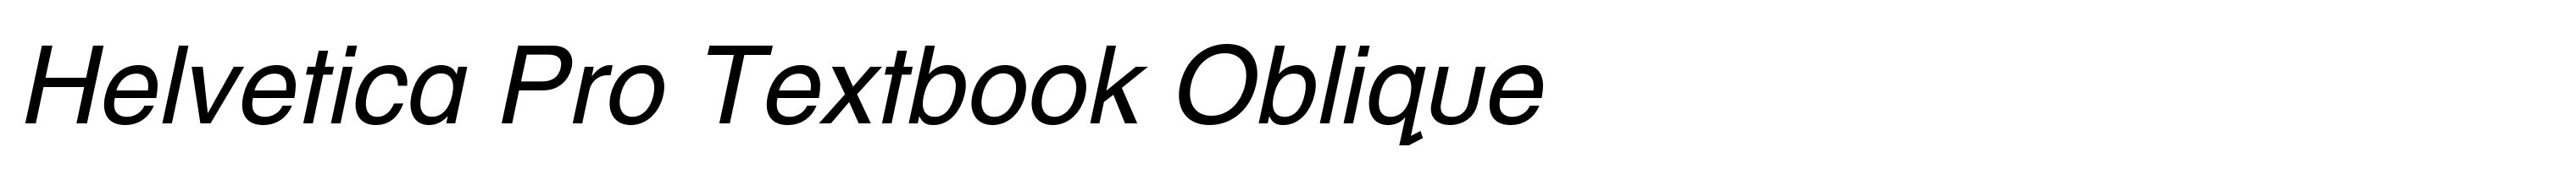 Helvetica Pro Textbook Oblique